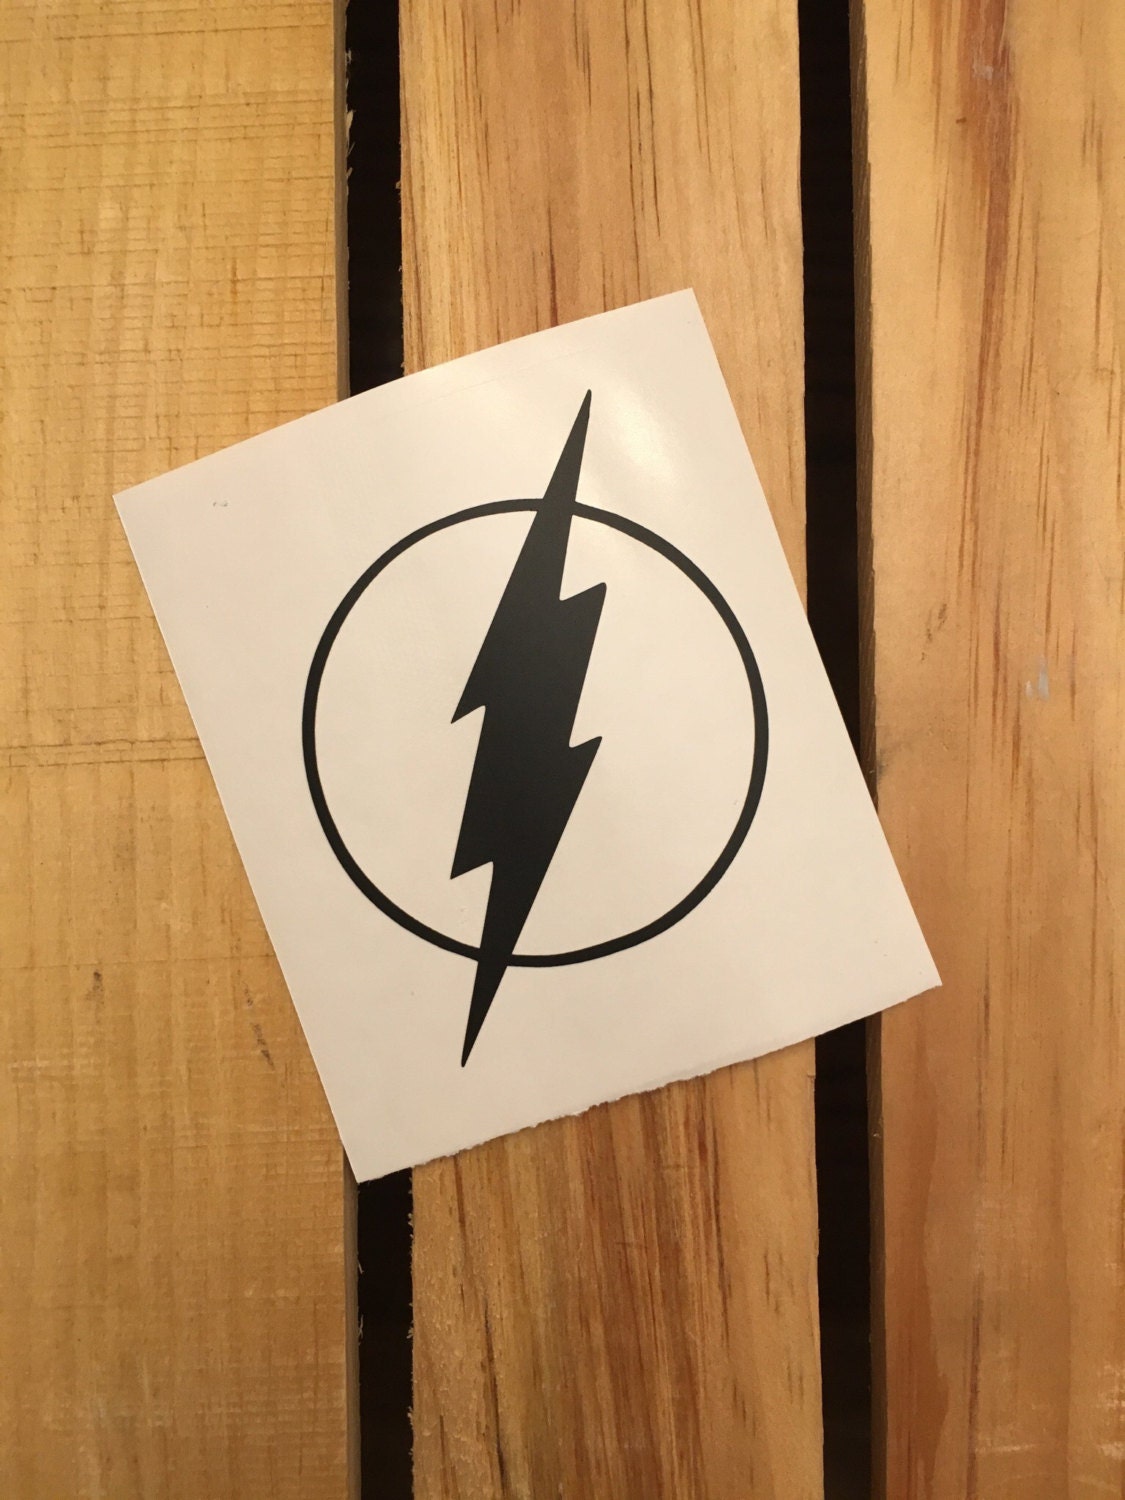 The Flash Vinyl Decal Sticker